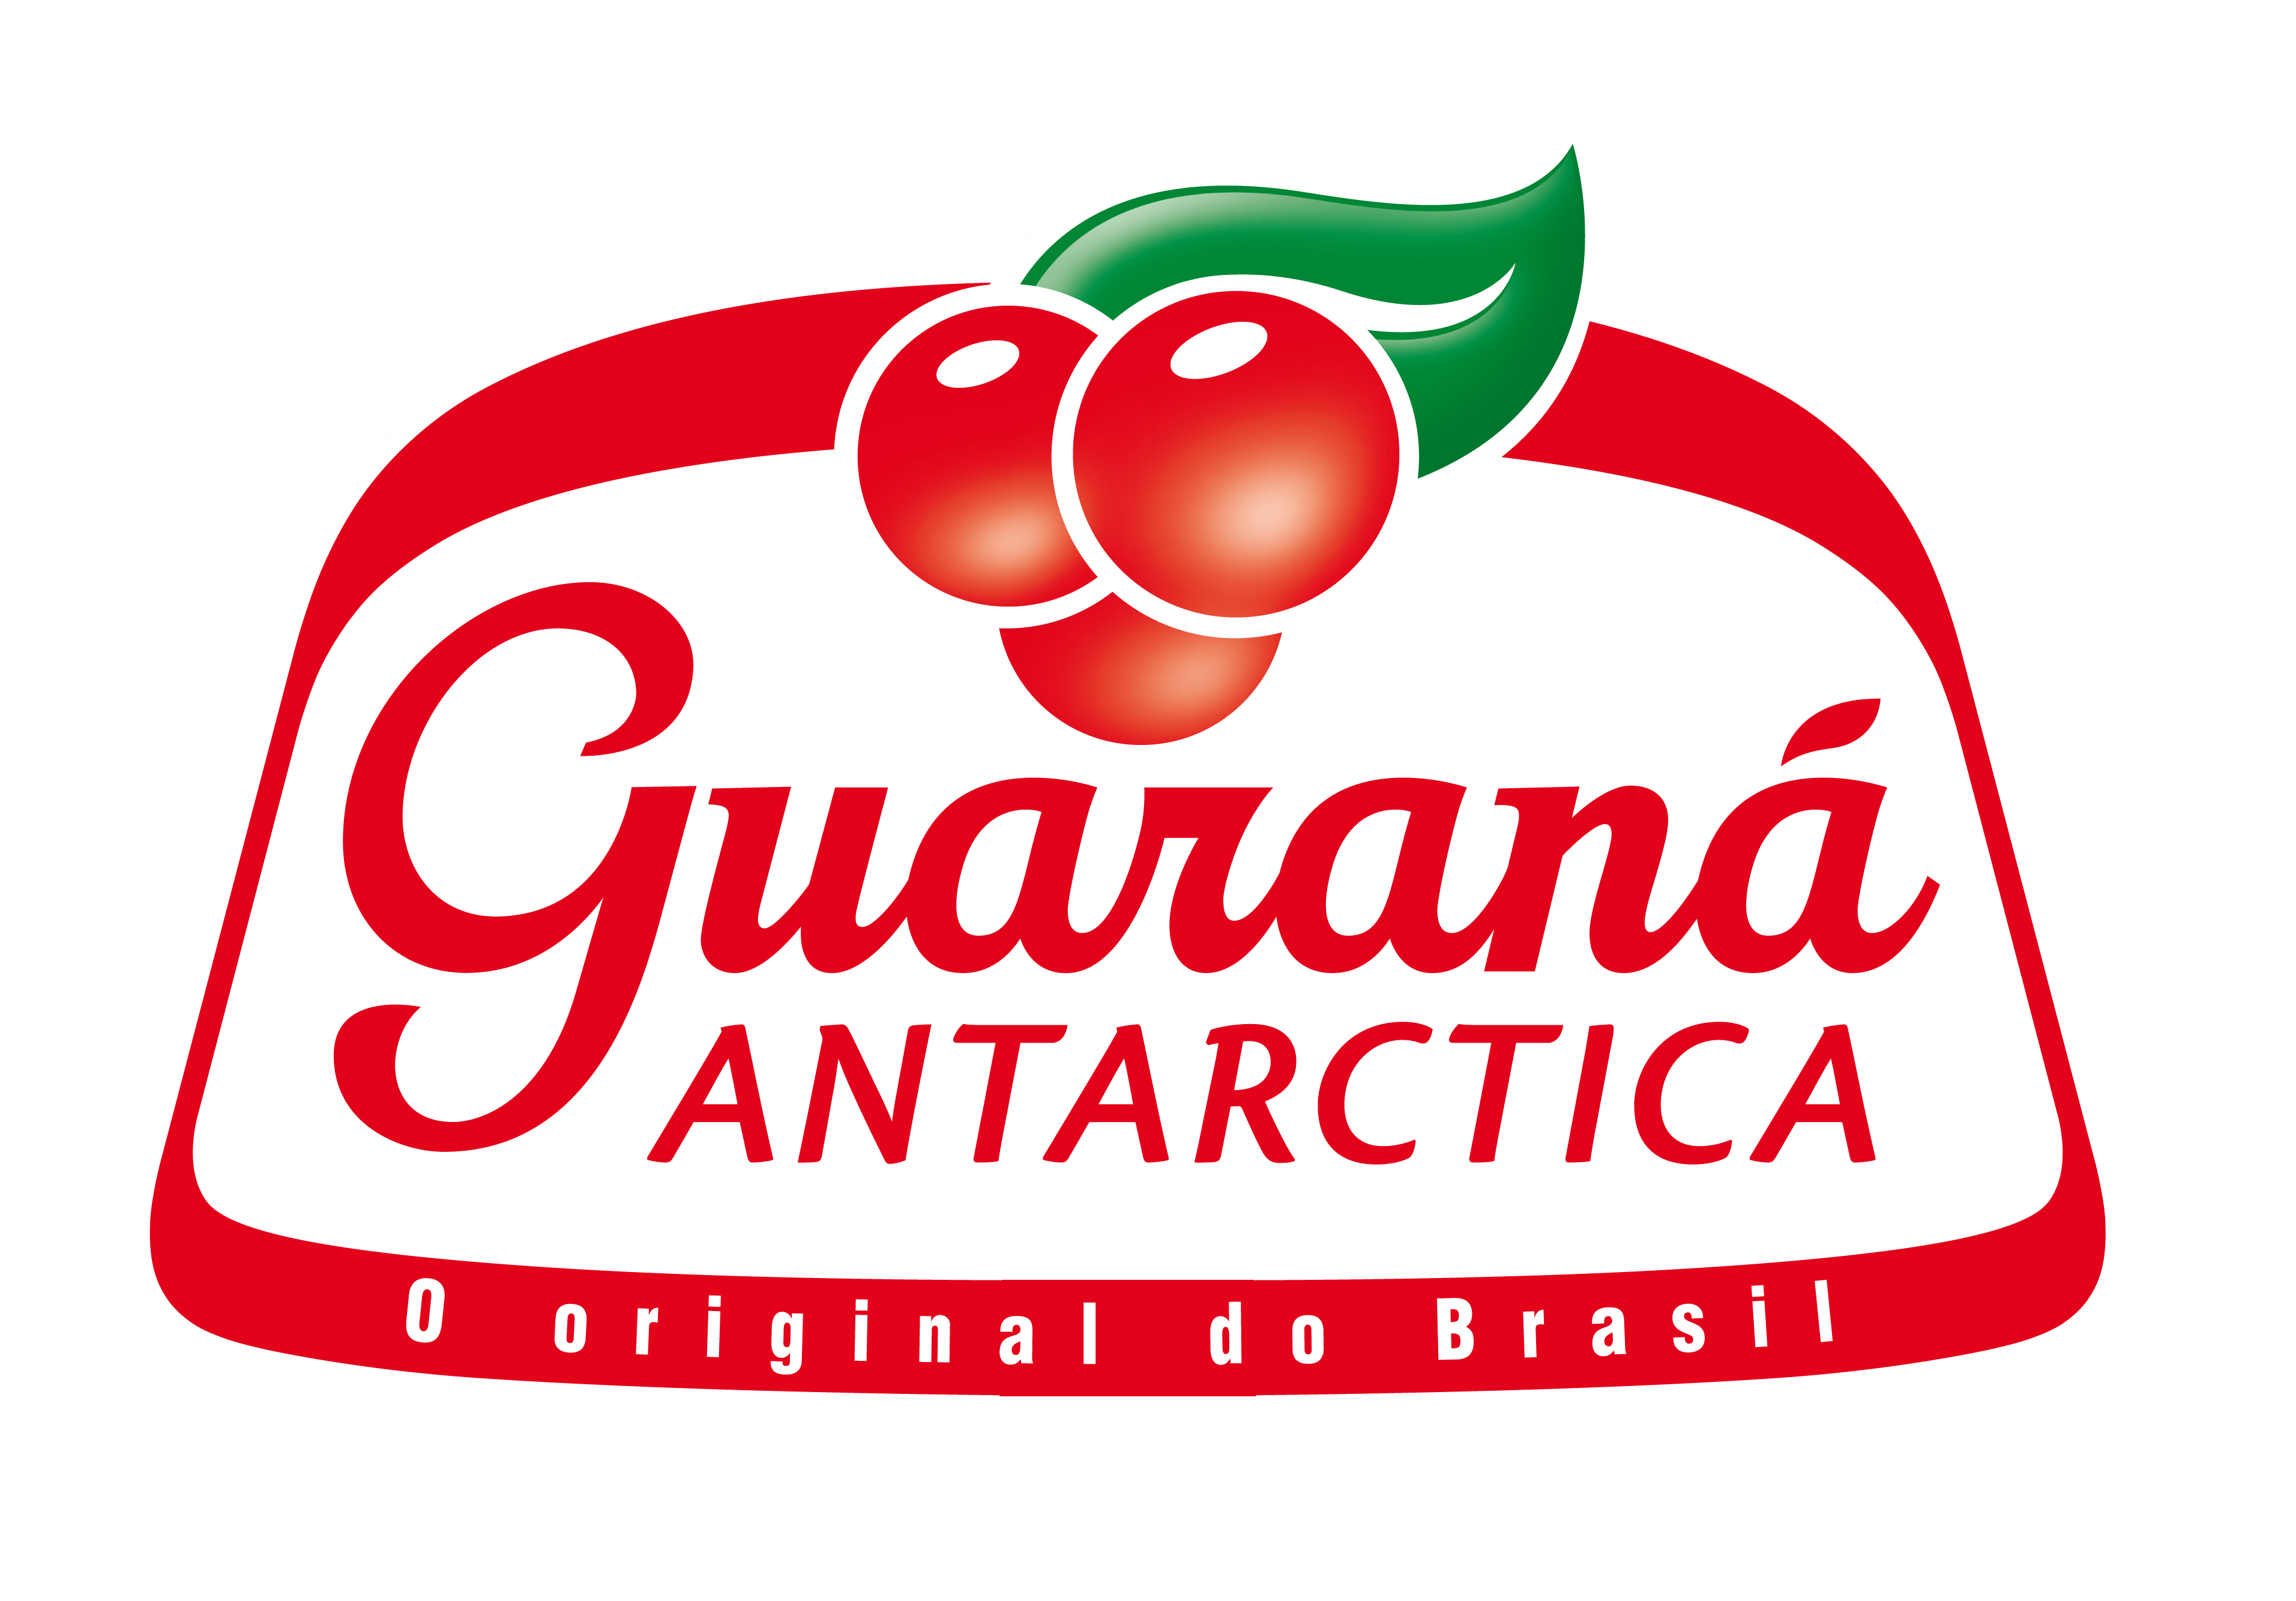 Guarana antartica logo.